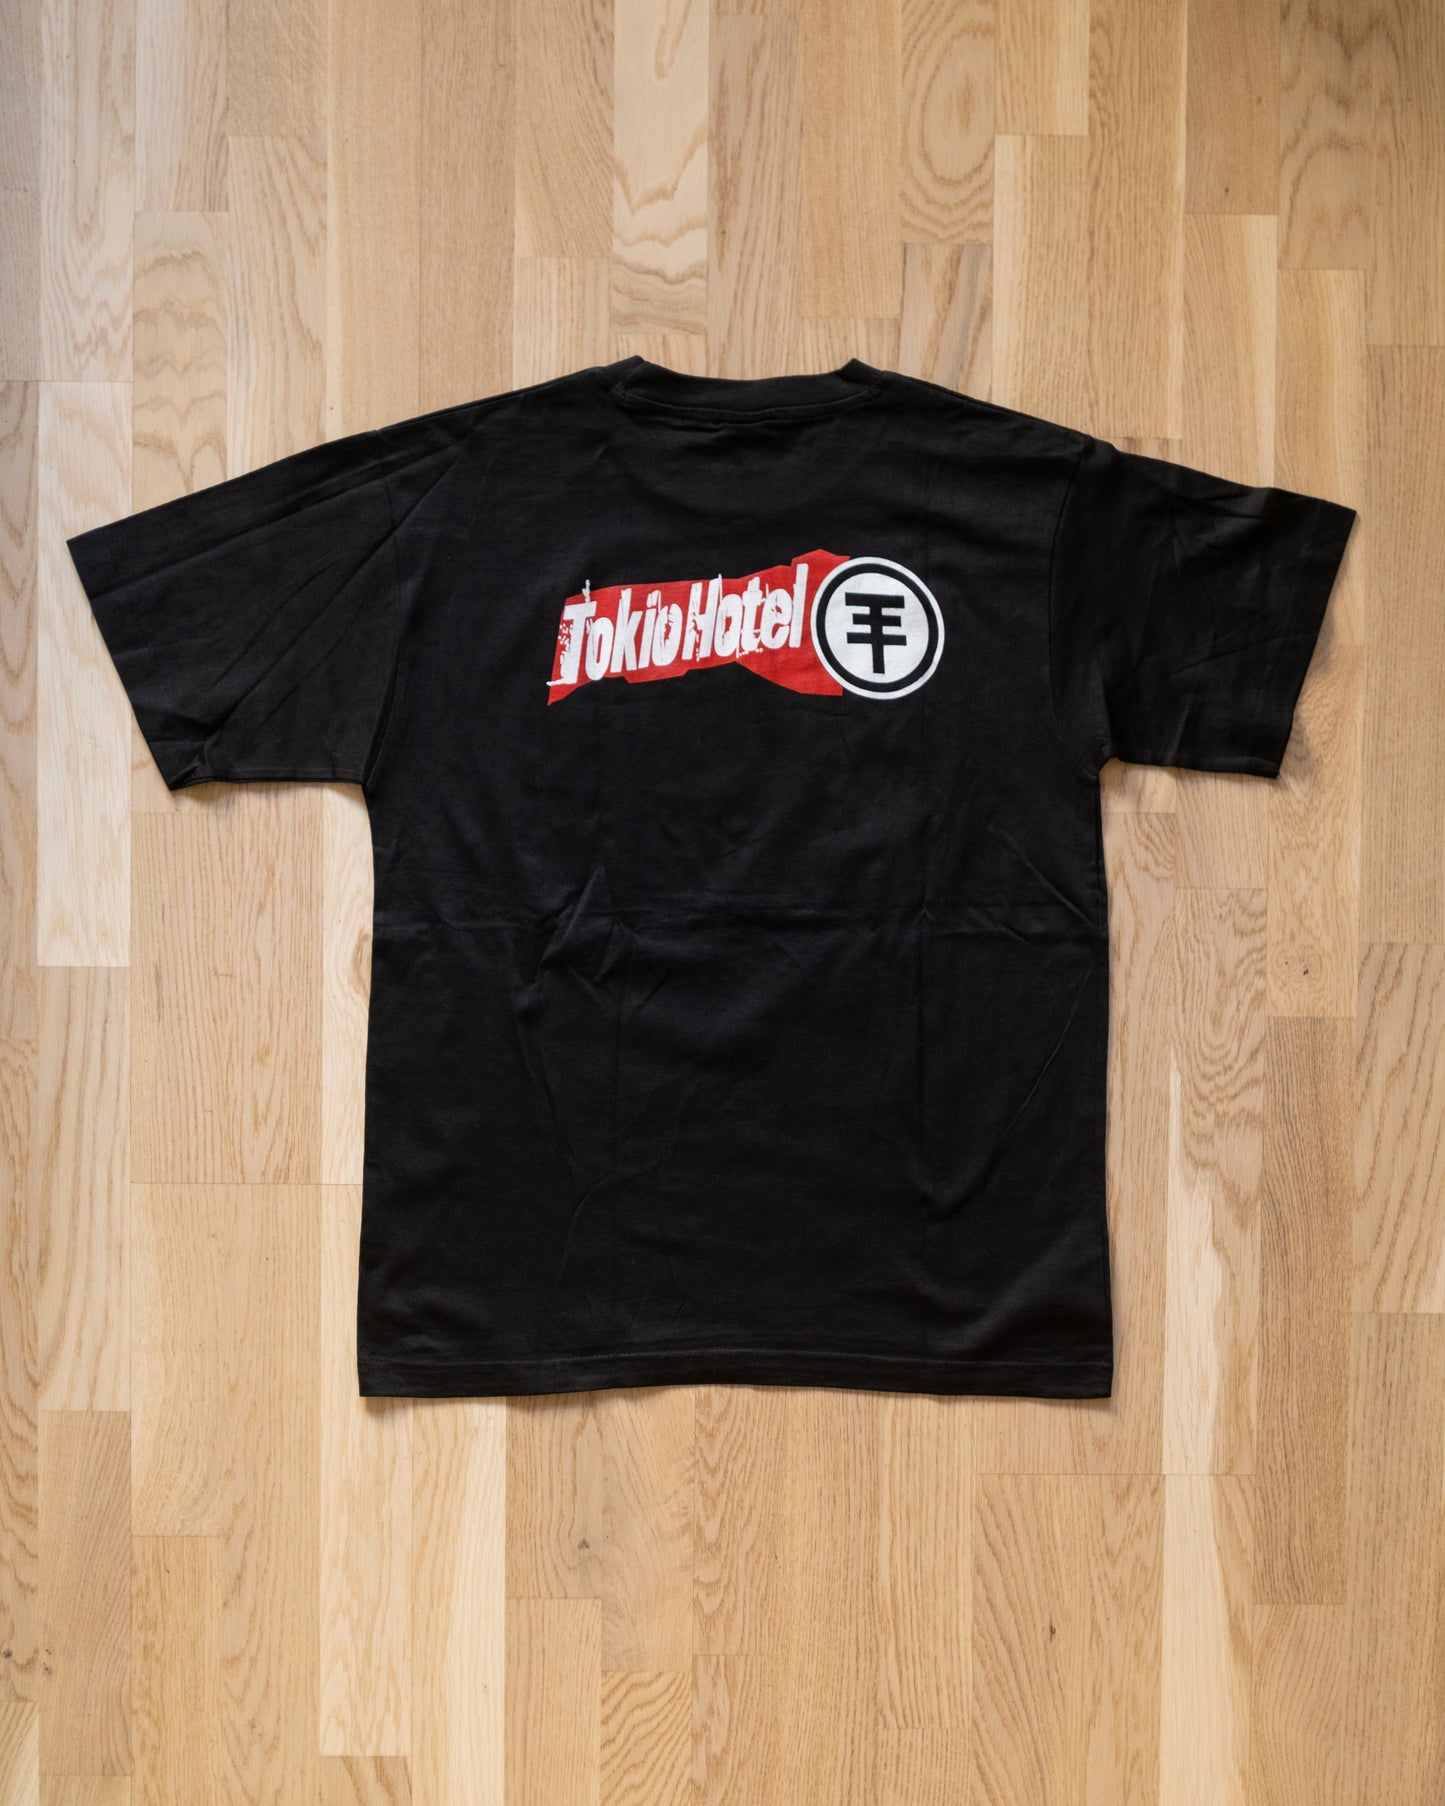 Tokio Hotel Vintage Band T-Shirt Size M